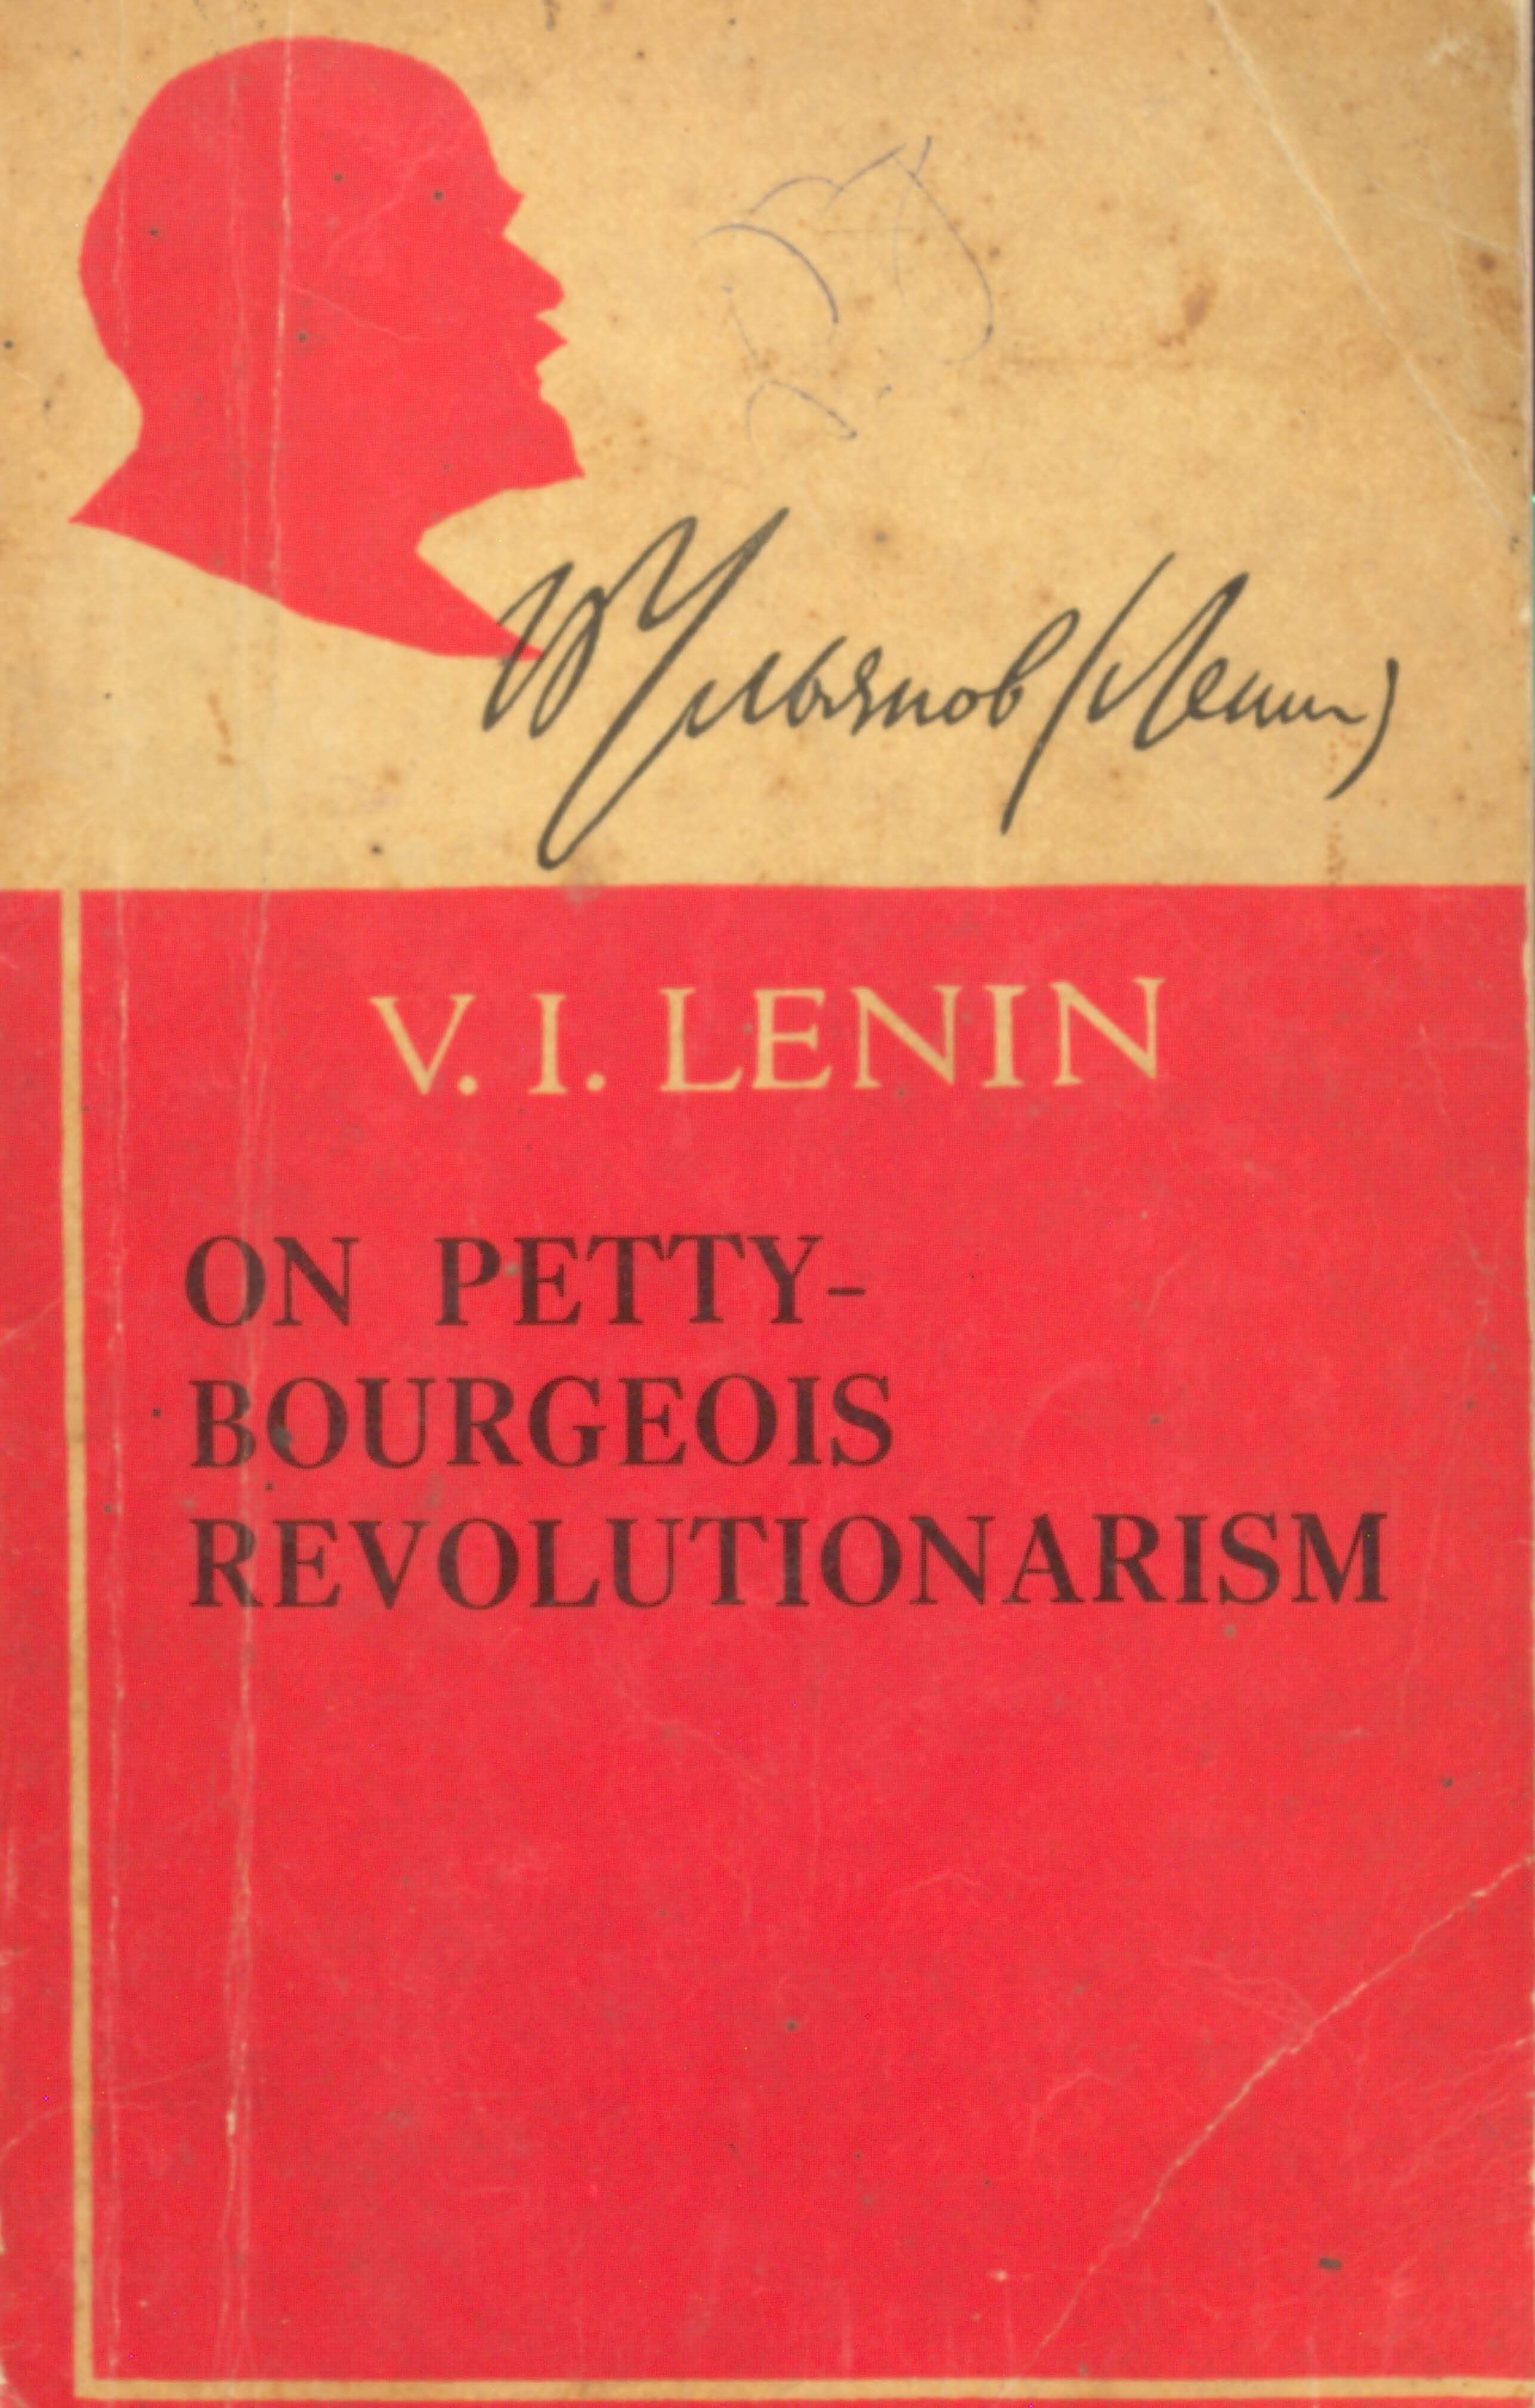 v.L.Lenin on petty-bourgeois revolutionarism